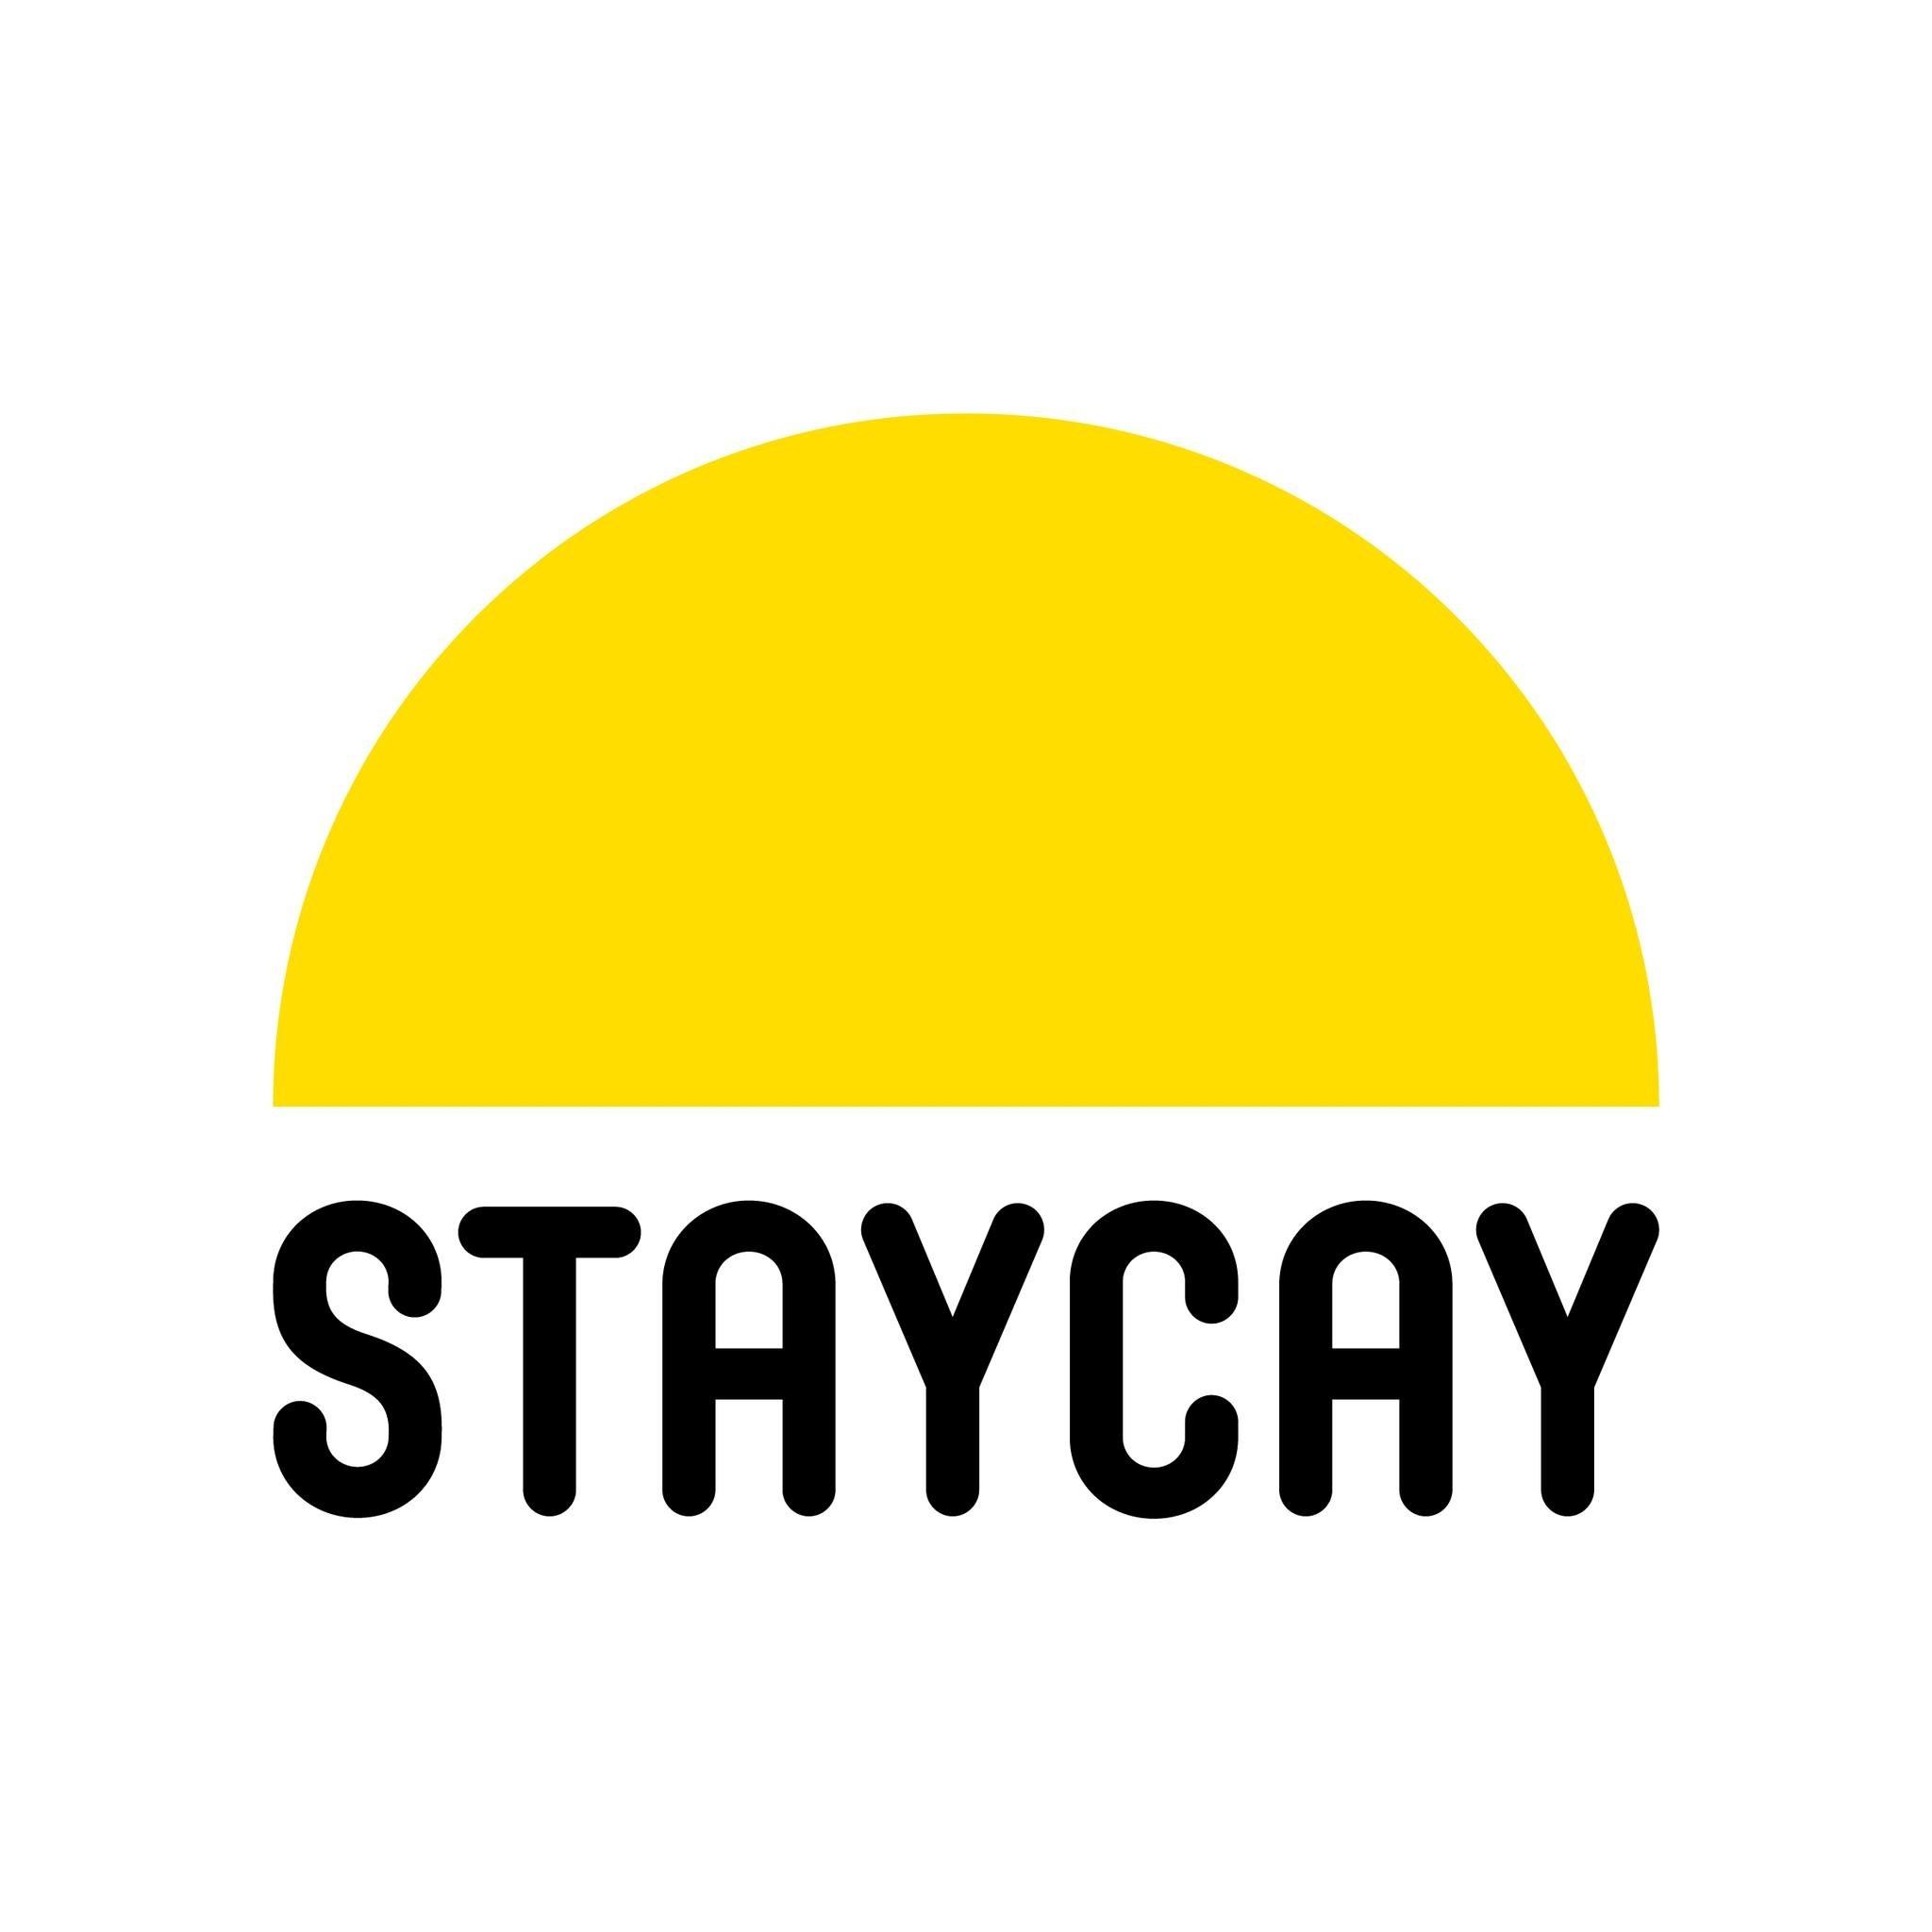 Staycay